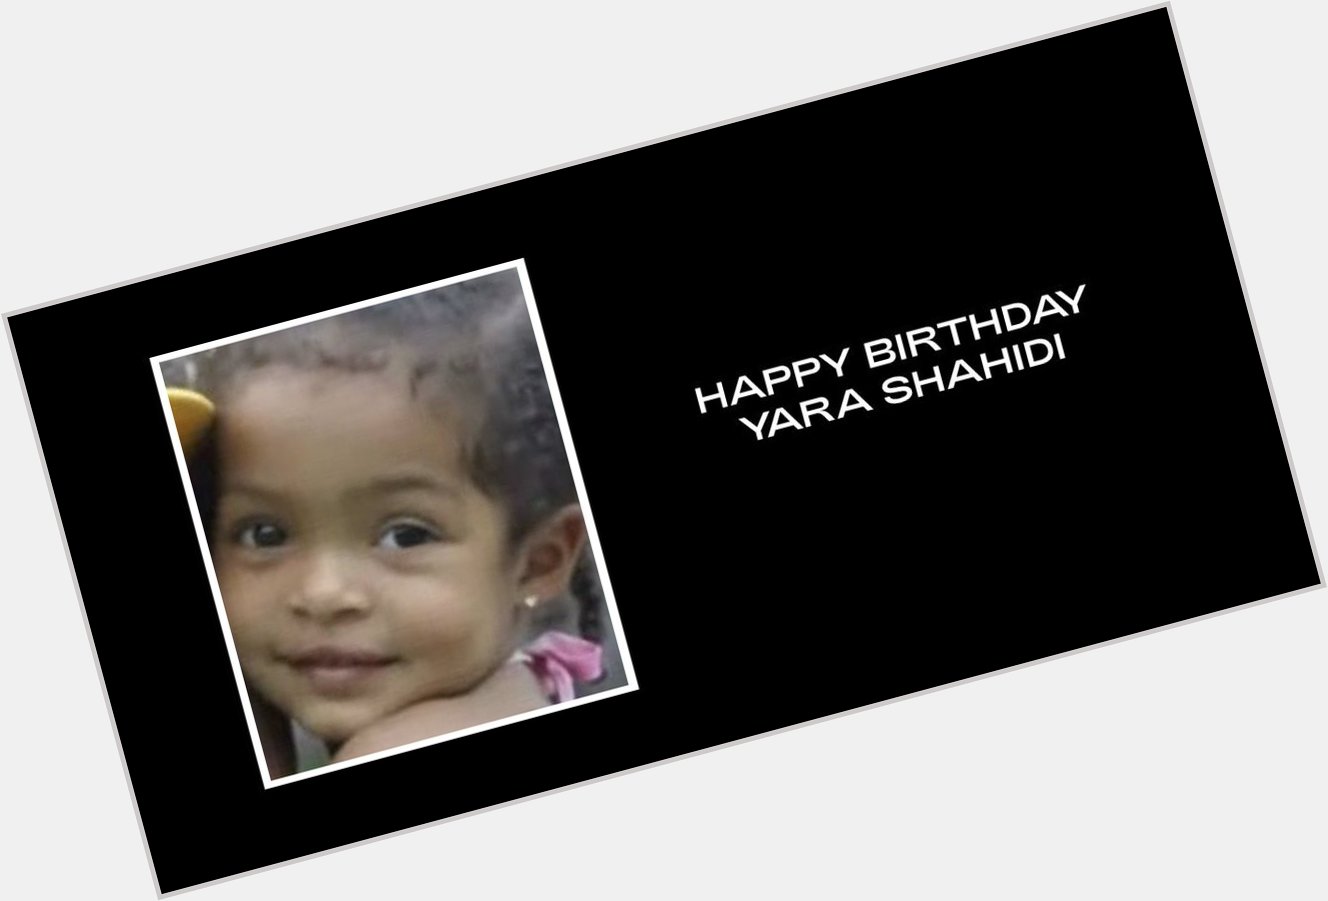 Happy Birthday Yara Shahidi! via  